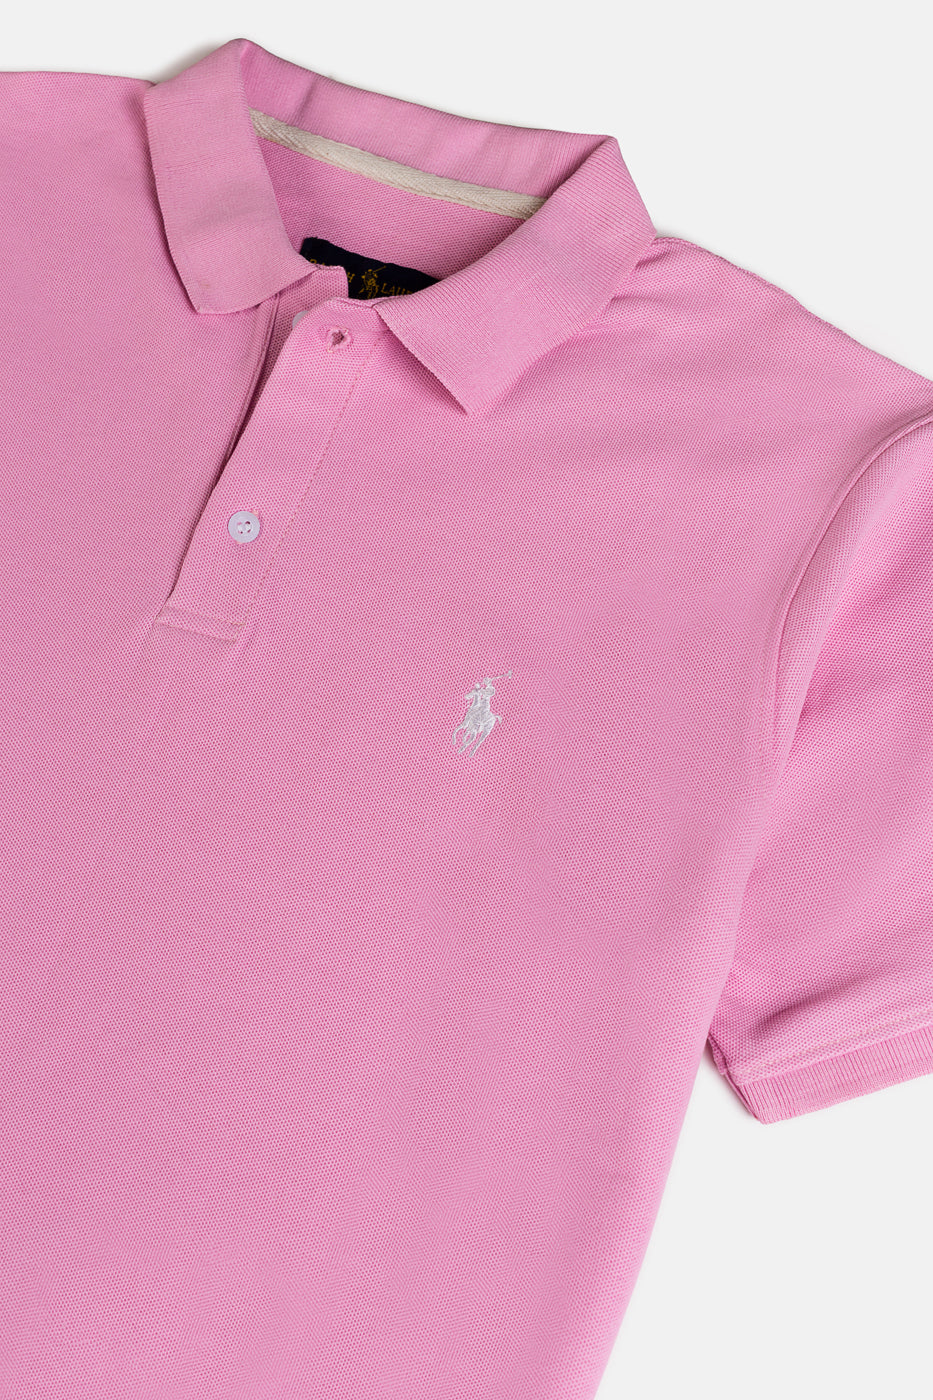 RL Premium Imported Polo Shirt - Flamingo